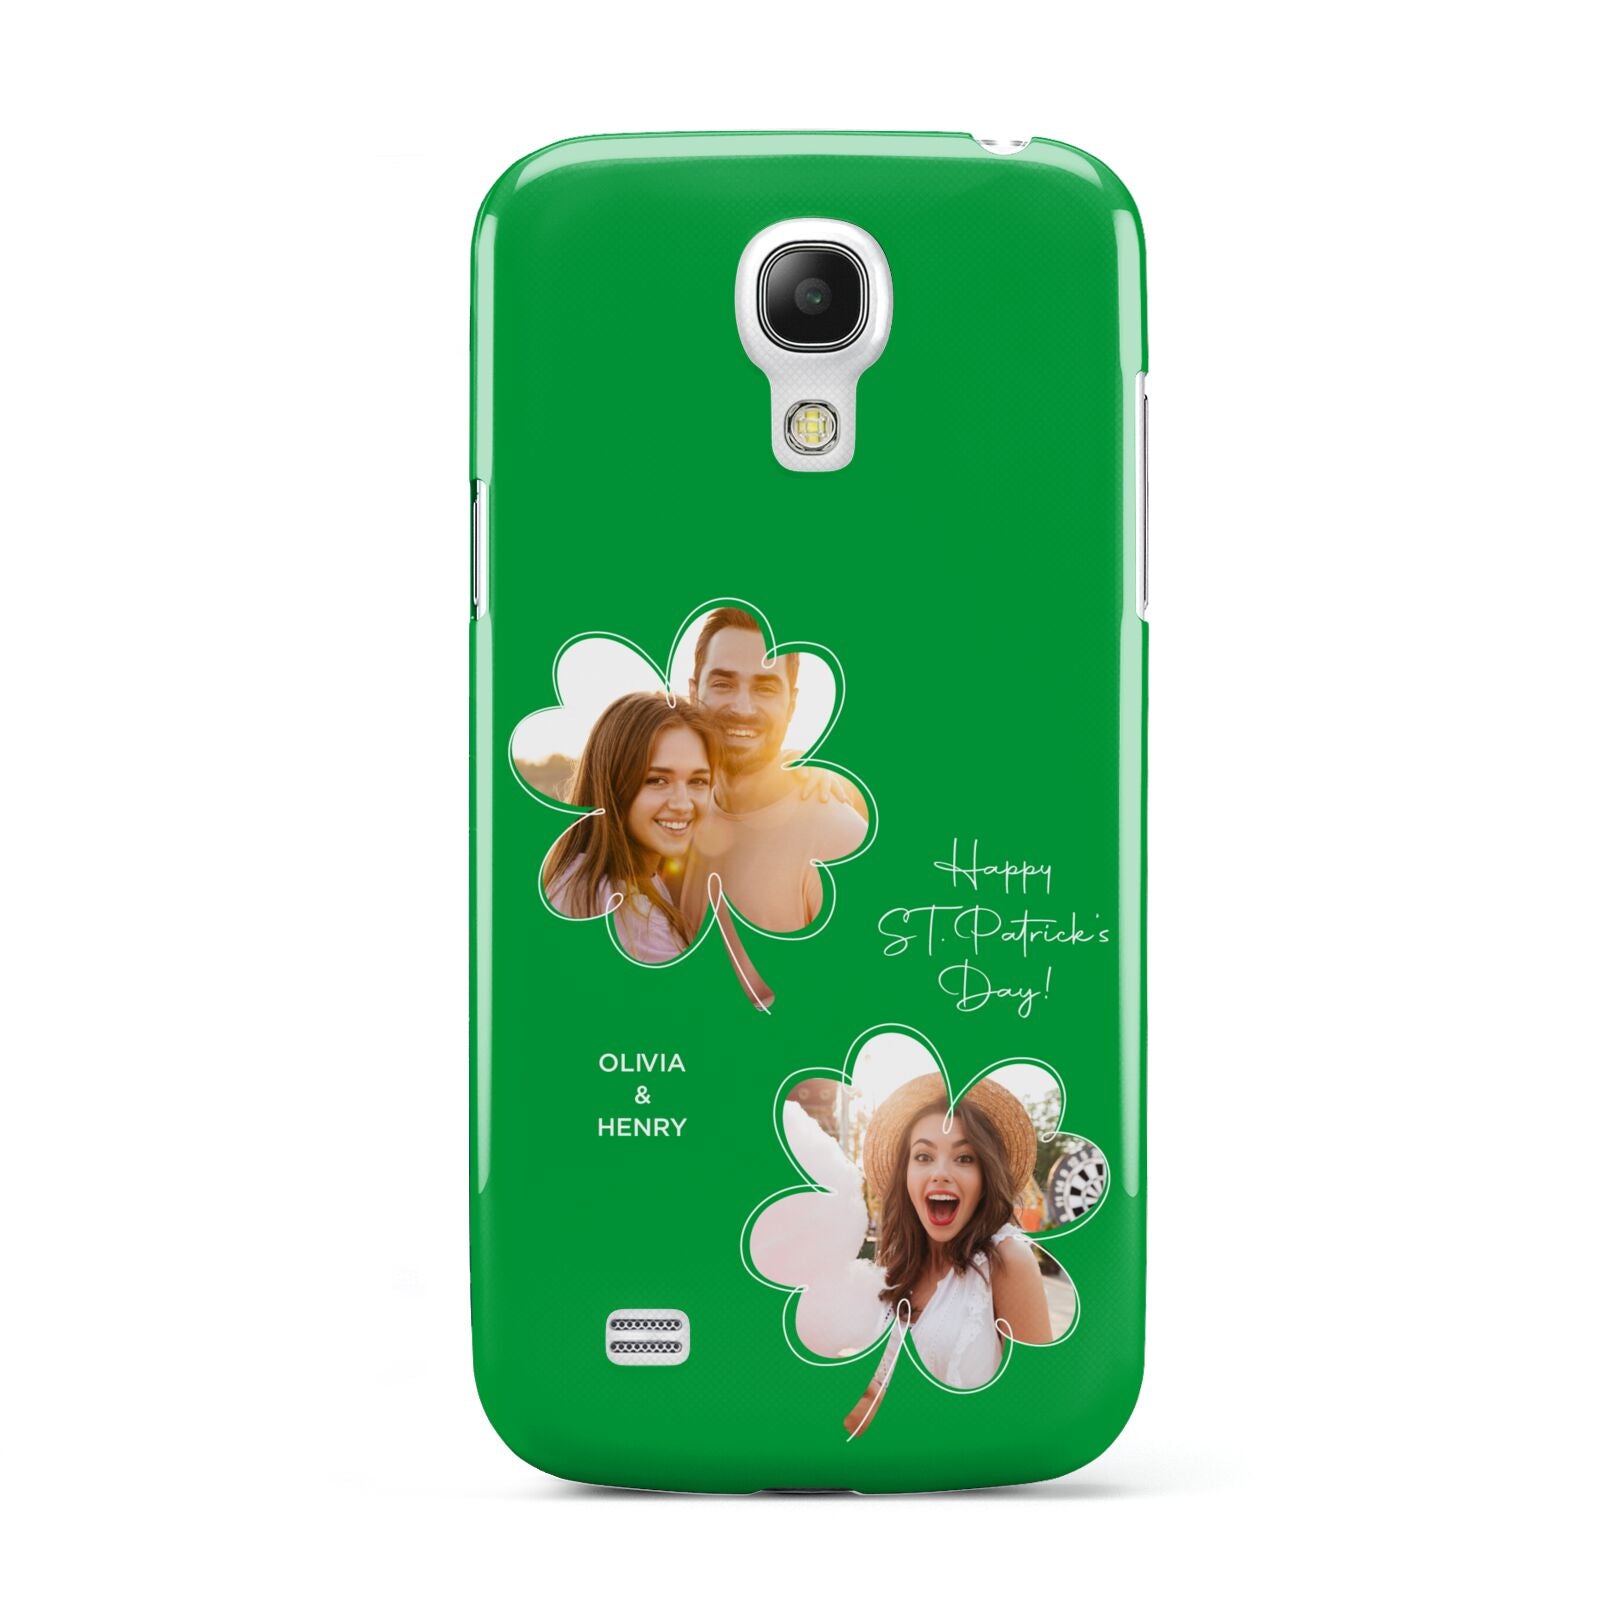 Personalised Photo St Patricks Day Samsung Galaxy S4 Mini Case